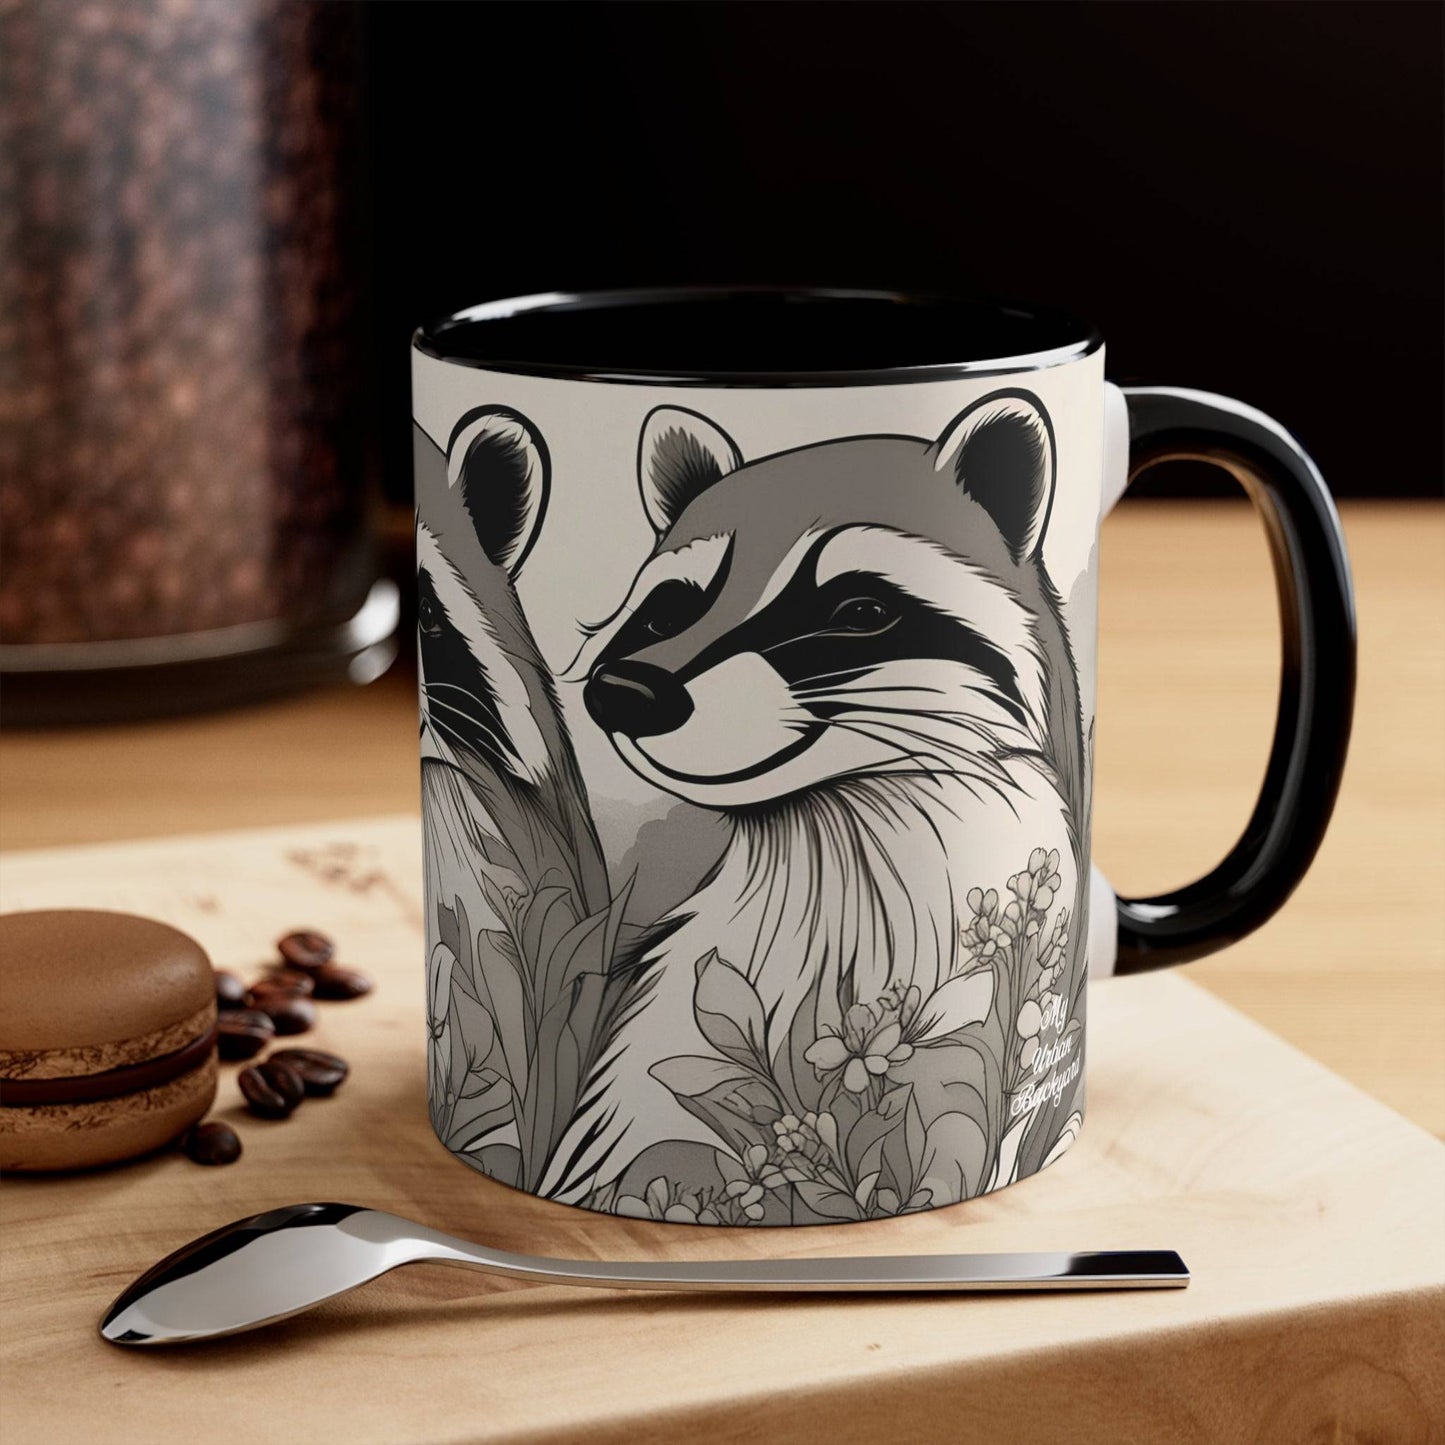 Ceramic Mug for Coffee, Tea, Hot Cocoa. Home/Office, Three Raccoons